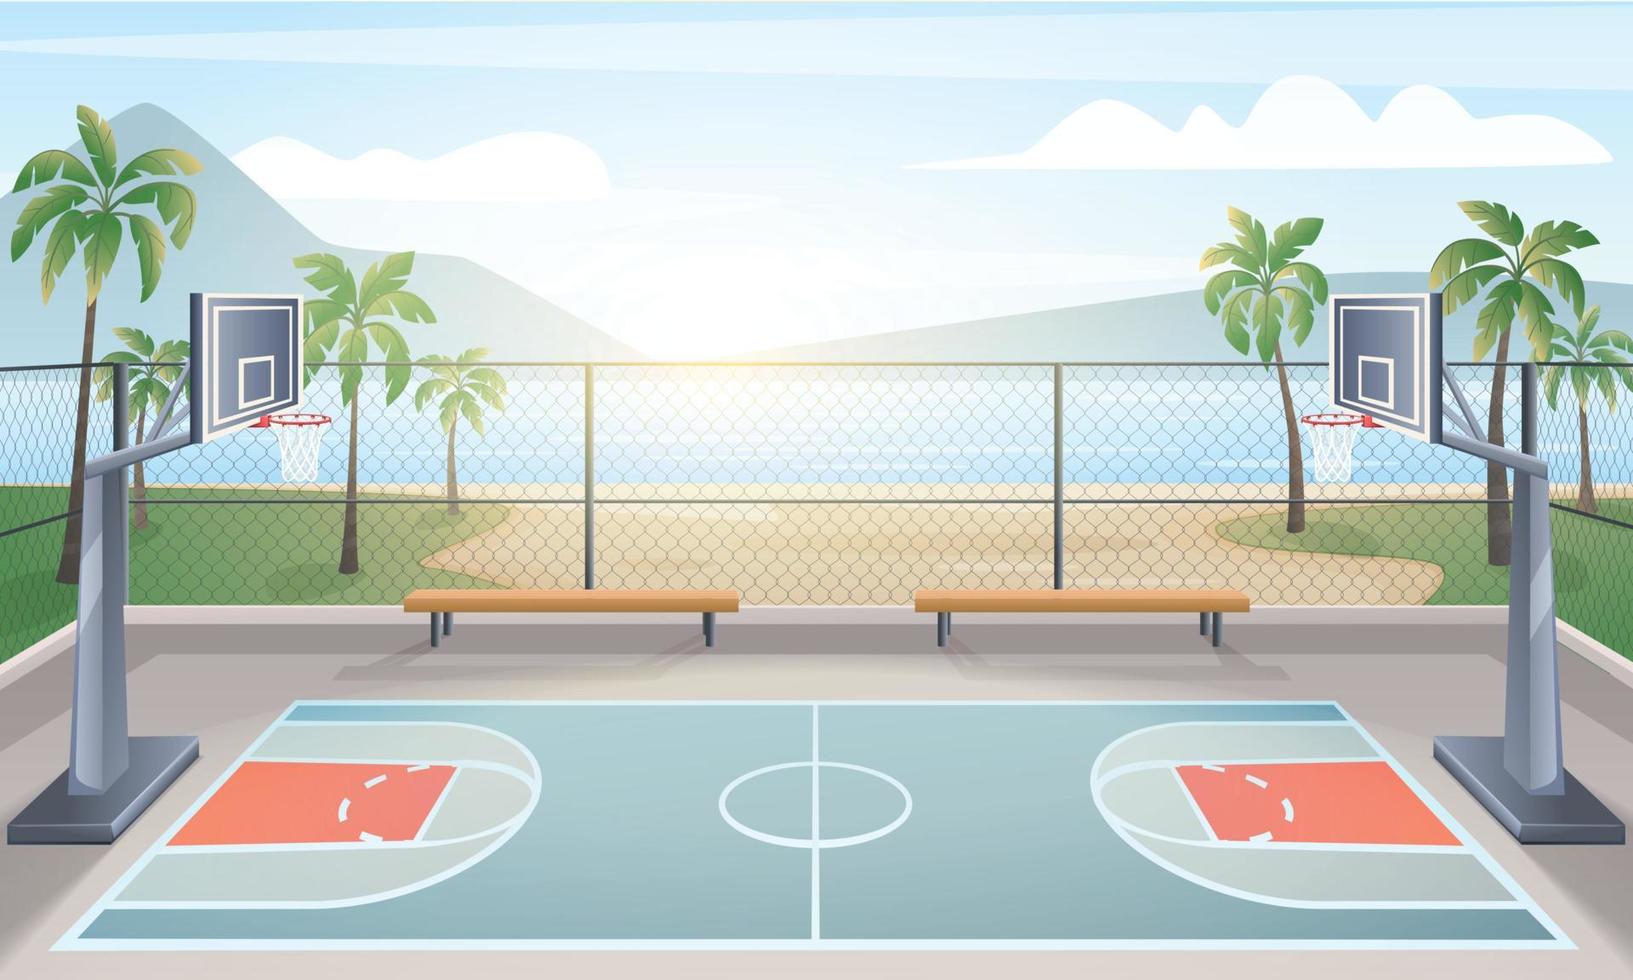 Cartoon Basketball Court vector